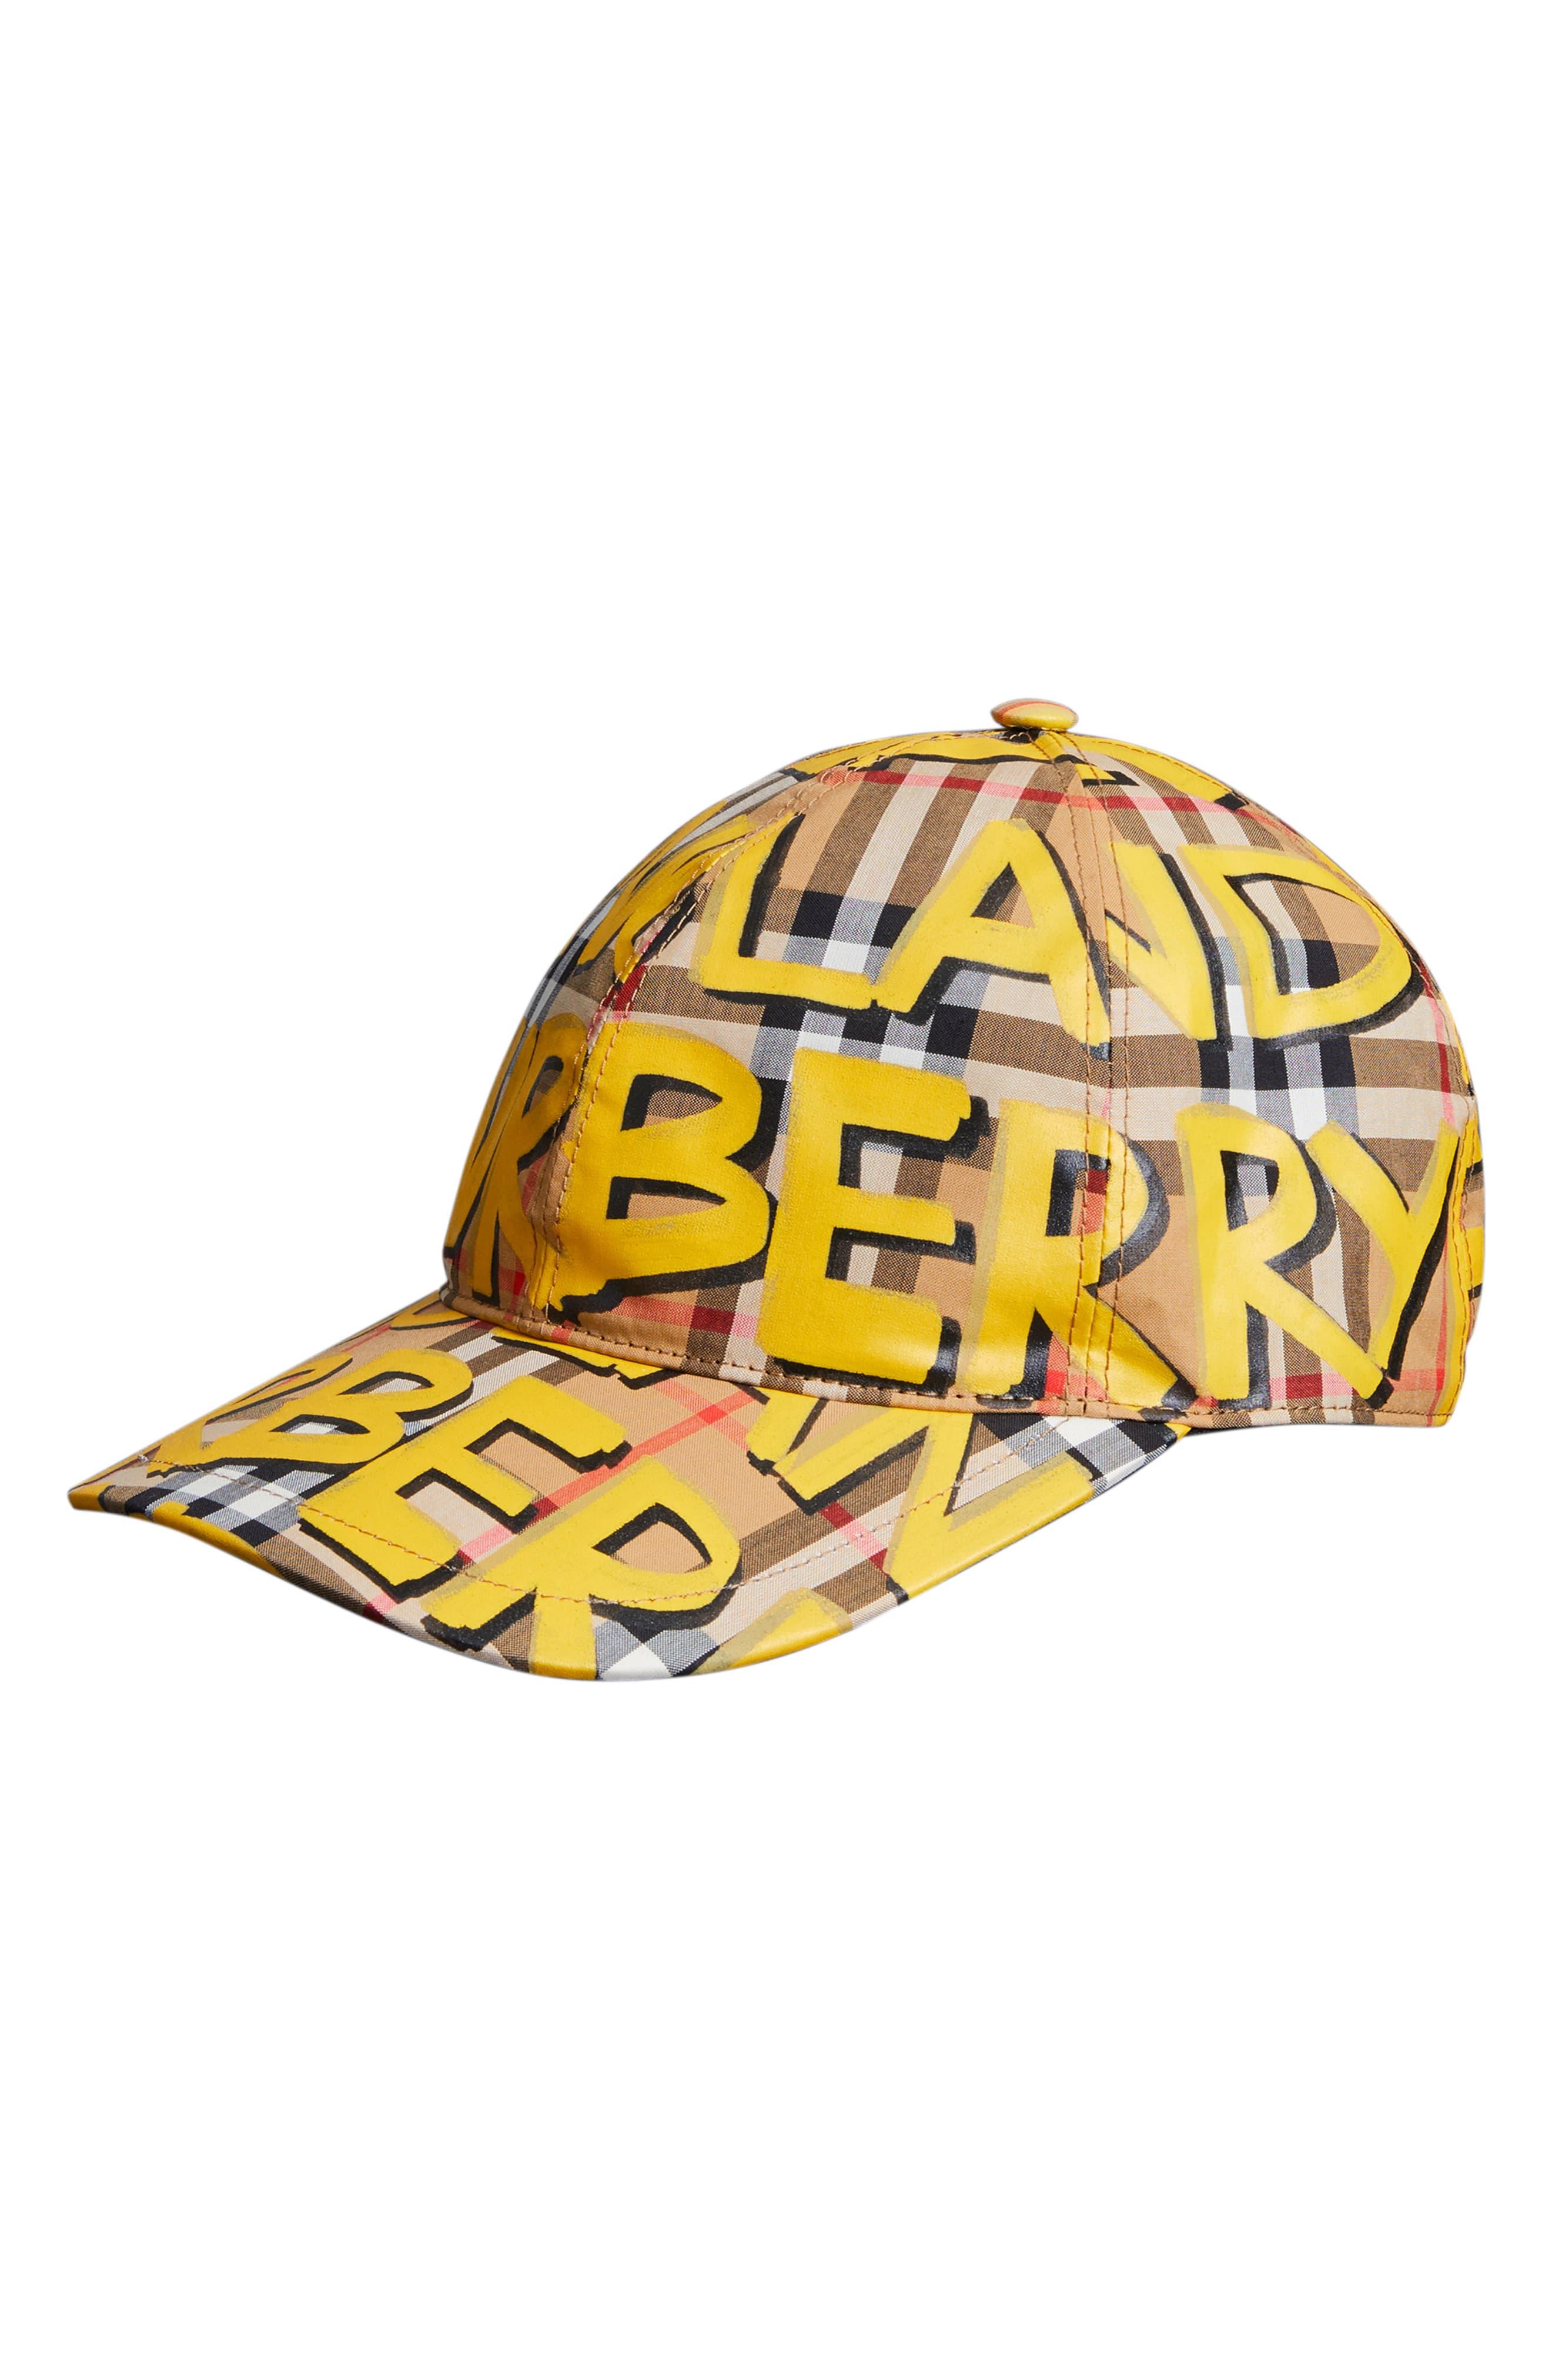 burberry graffiti hat